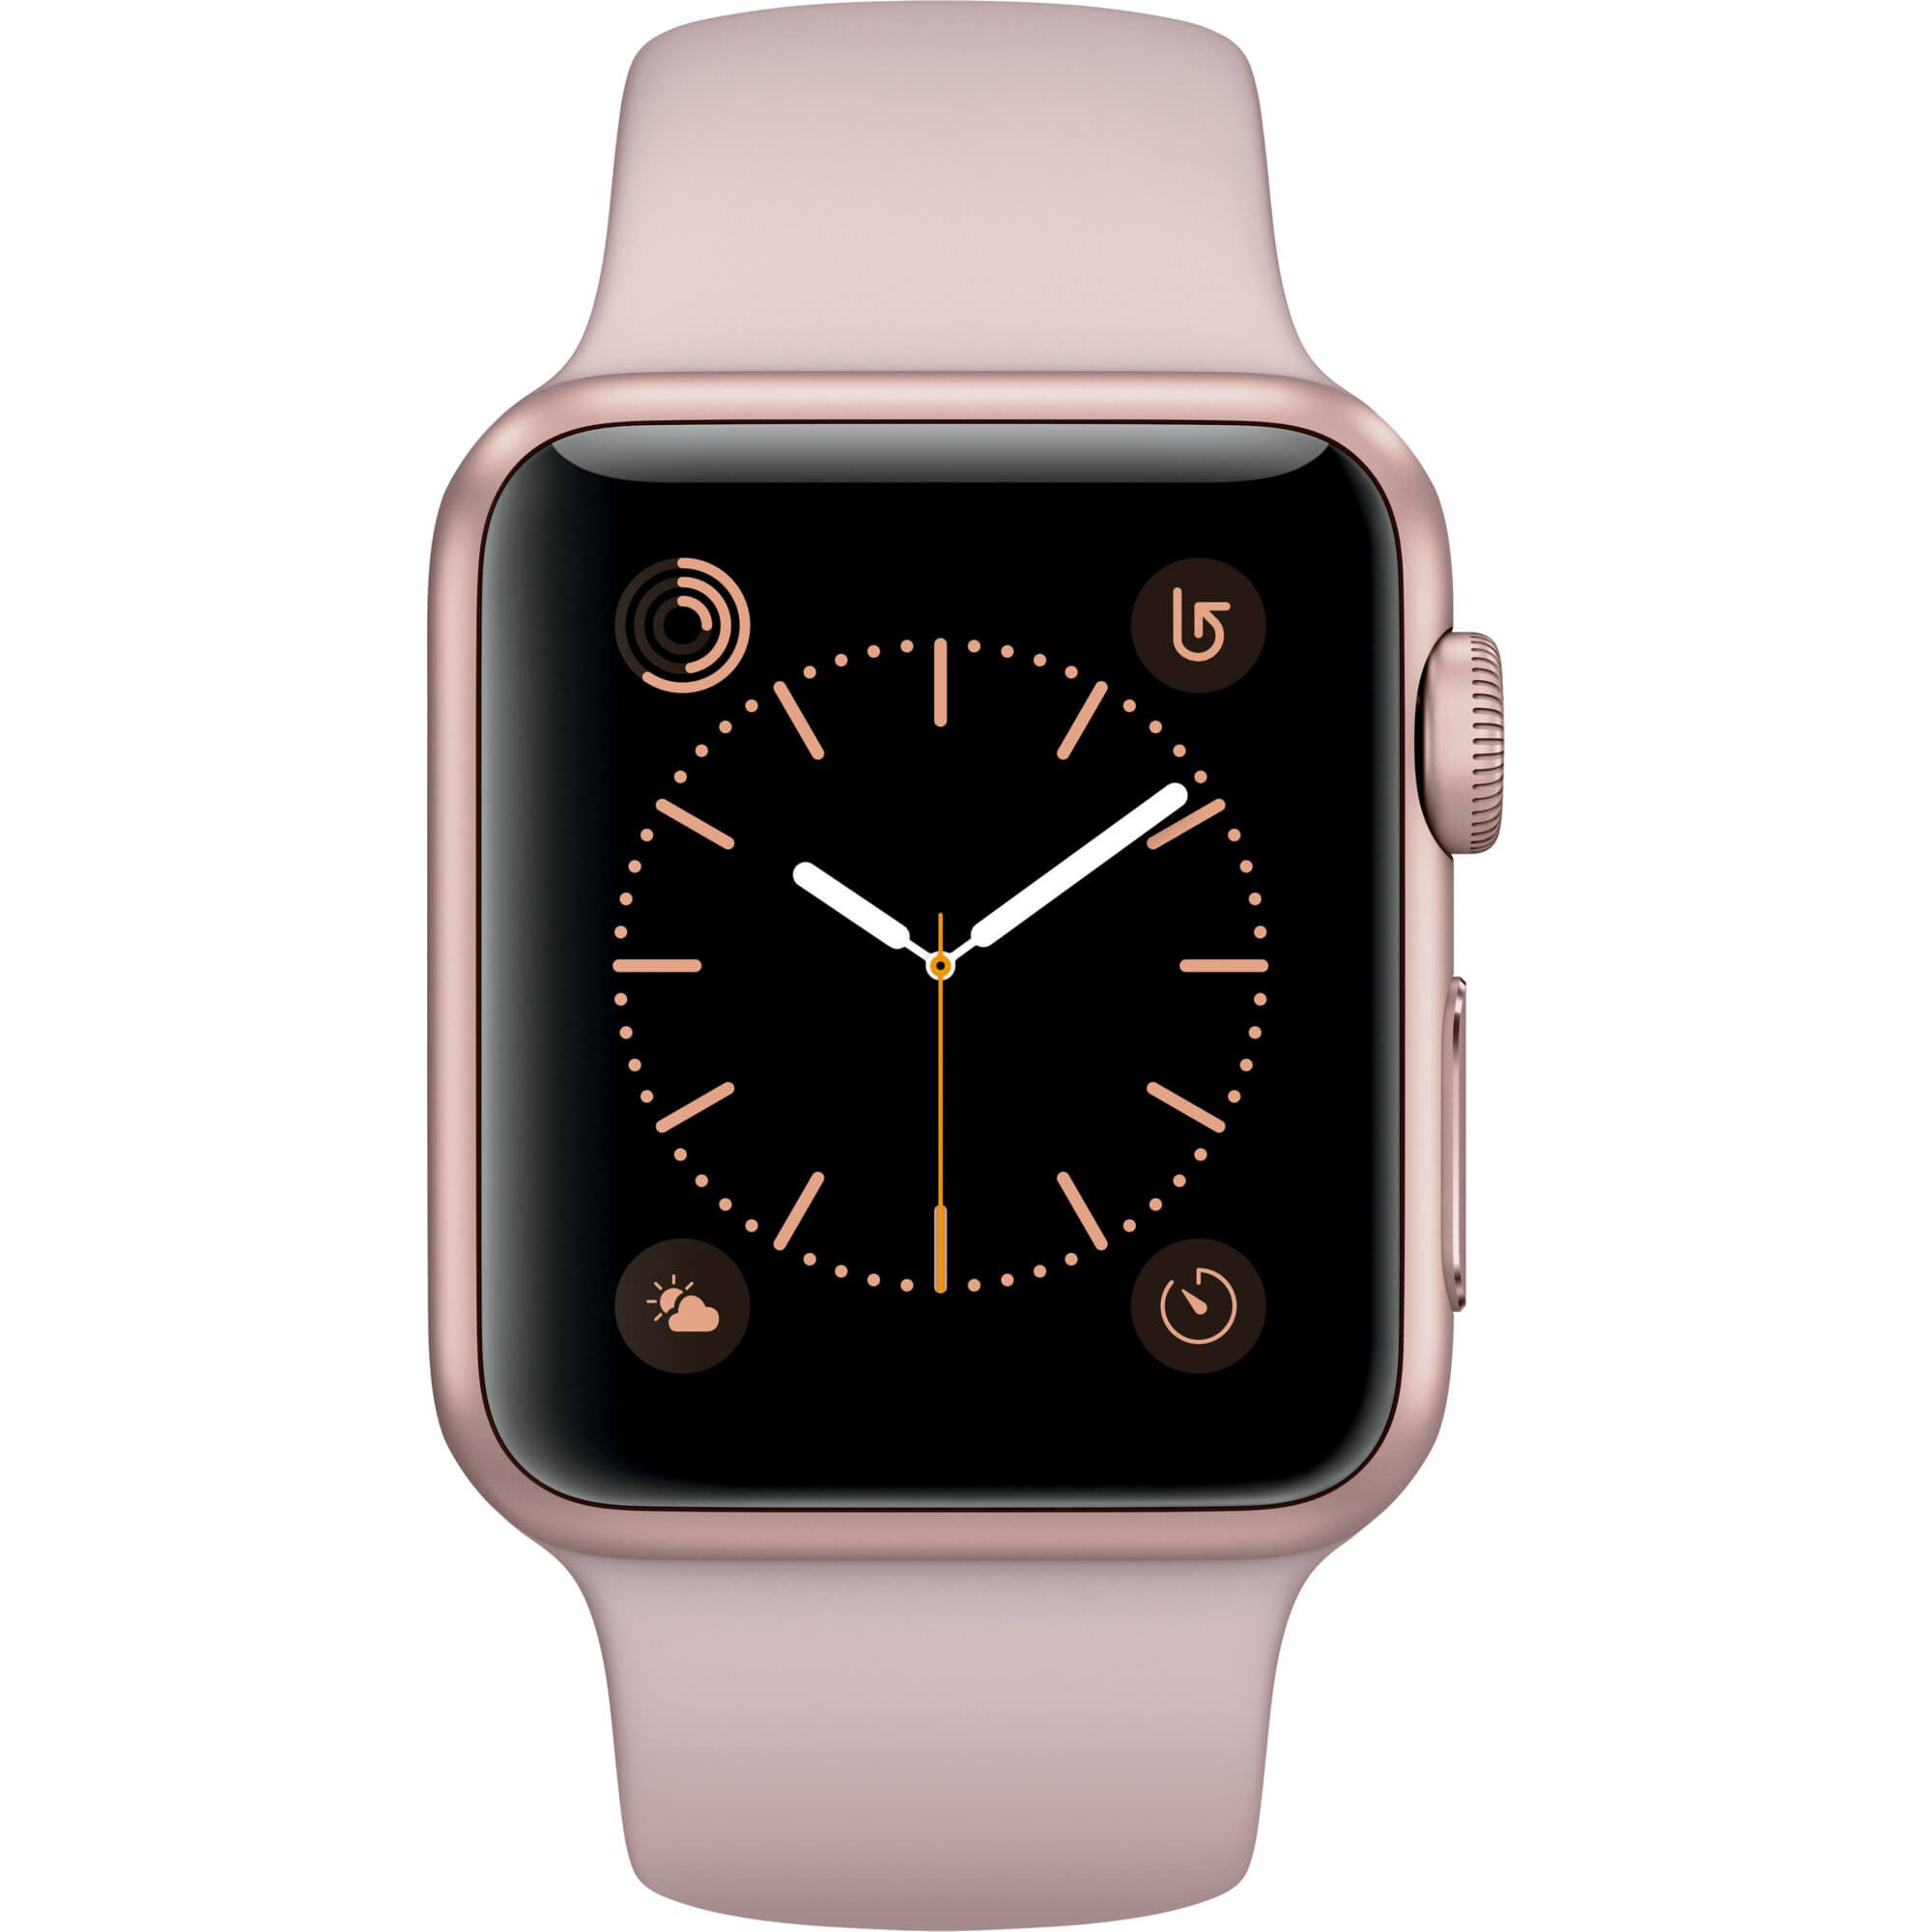  Apple Watch 2 38mm Rose Gold Aluminium Case, Pink Sand Sport Band 